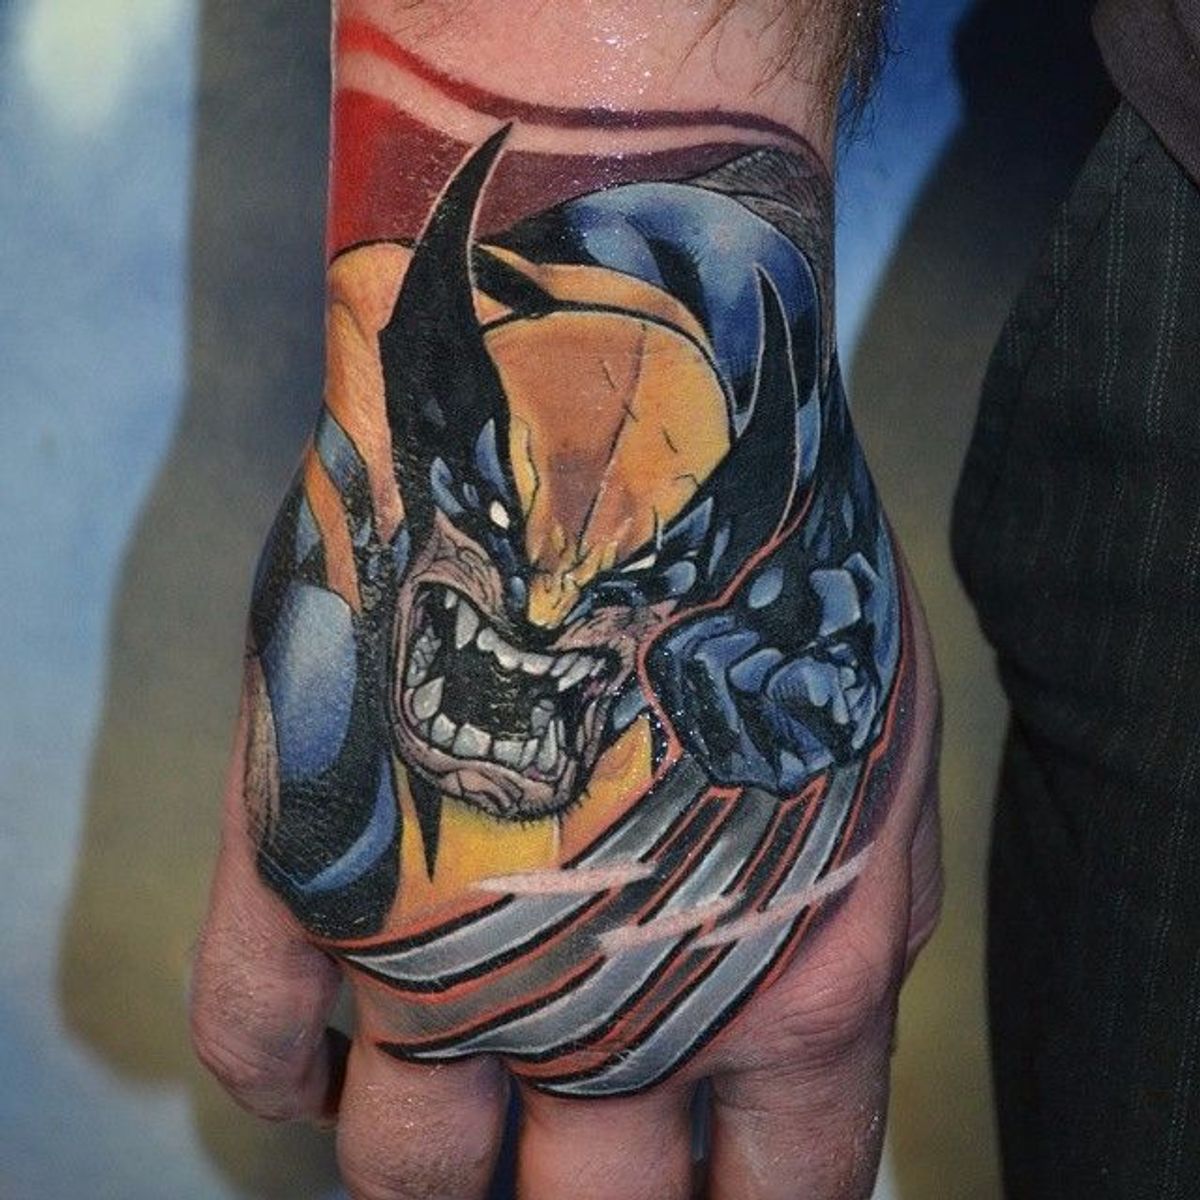 Tattoo uploaded by Robert Davies • Spider-Man Tattoo by Troy Slack